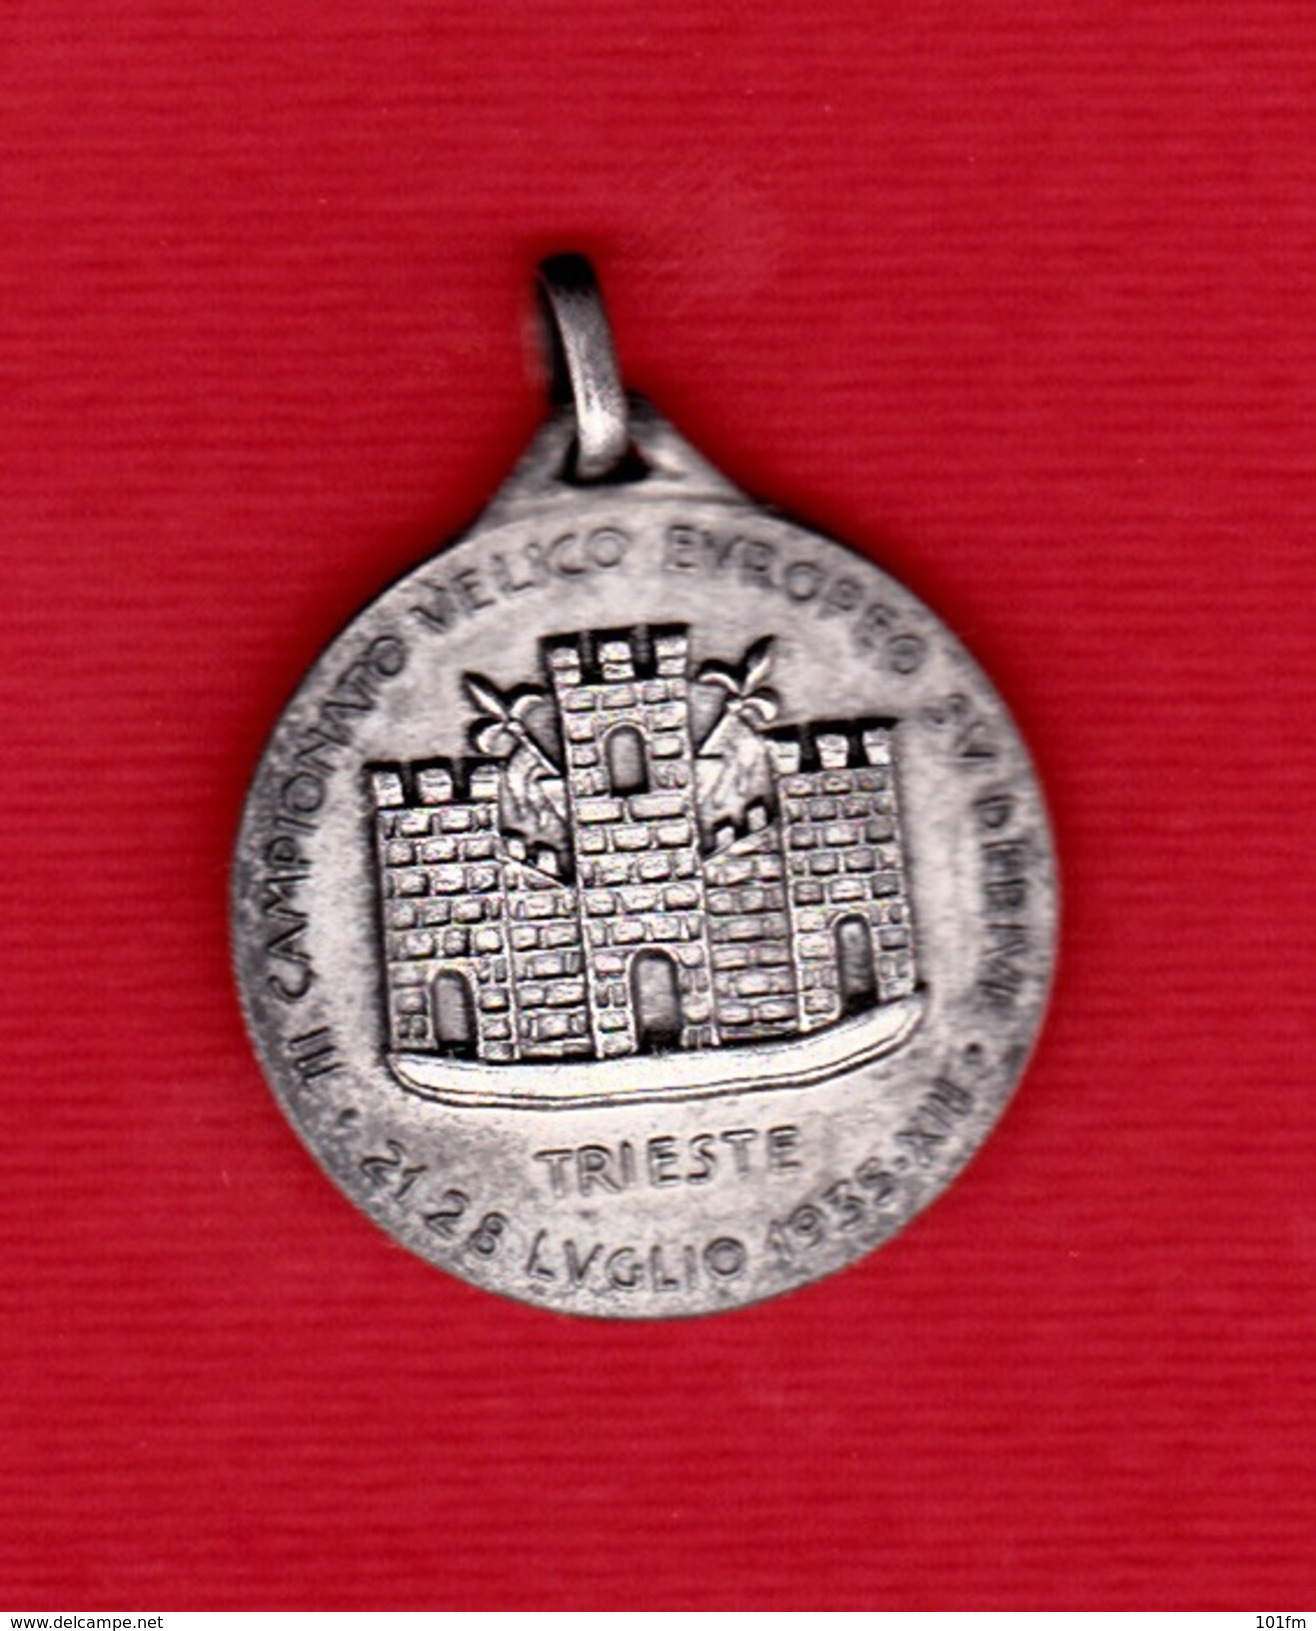 Trieste, Campionato Velico Europeo 1935, Medaglia D'argento - 1900-1946 : Vittorio Emanuele III & Umberto II